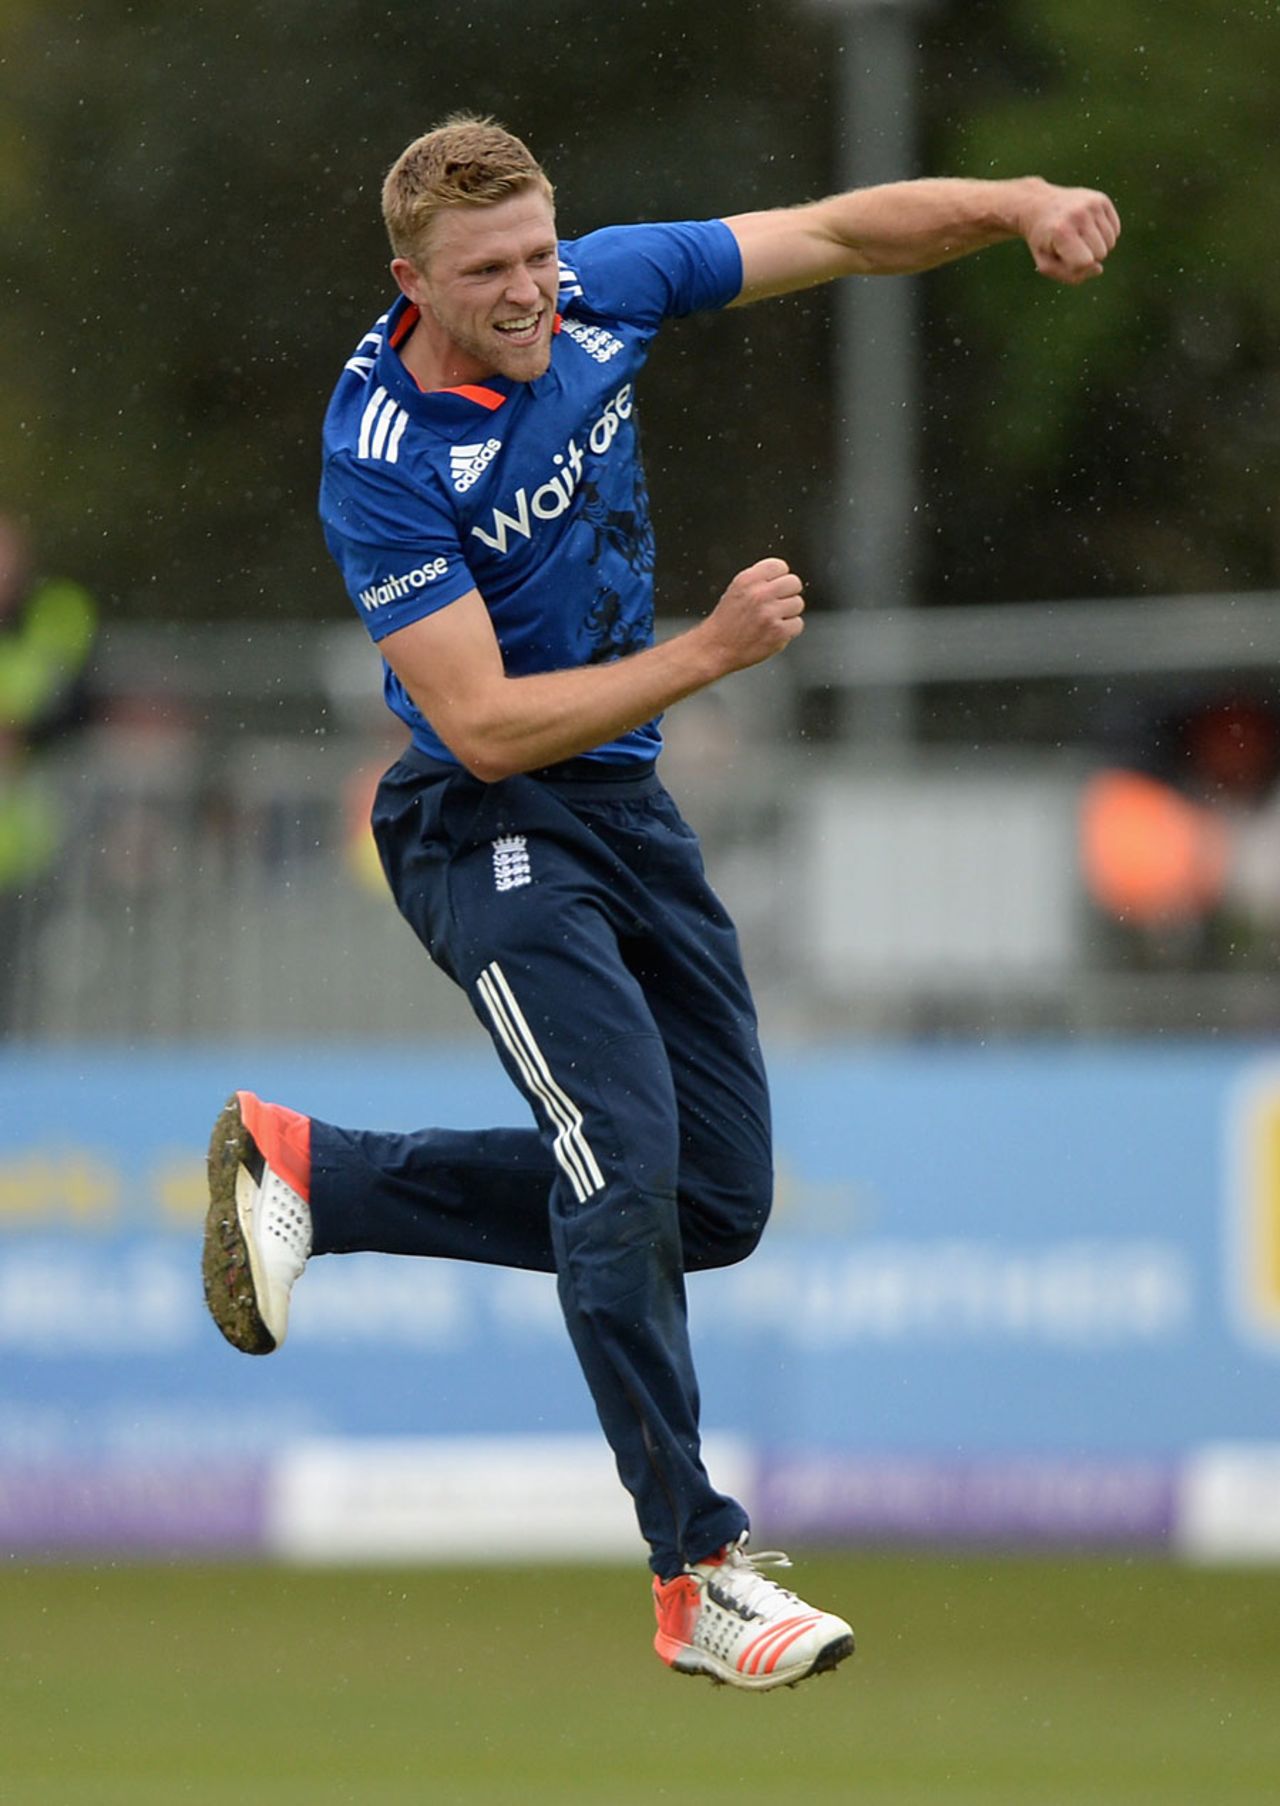 David Willey celebrates his maiden international wicket, Ireland v England, only ODI, Malahide, May 8, 2015